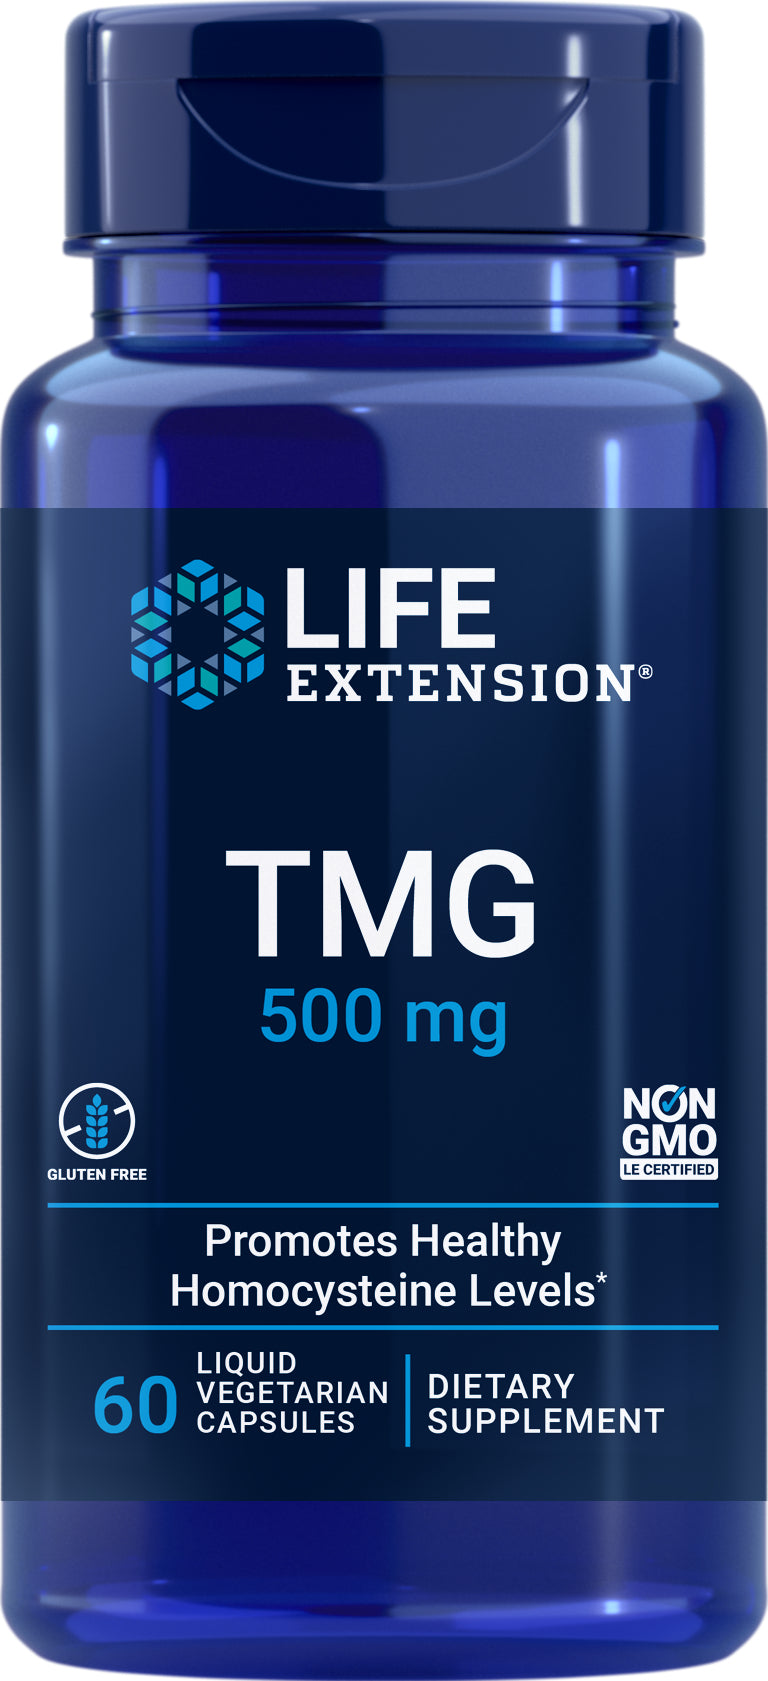 TMG 500 mg, 60 liquid vegetarian capsules by Life Extension